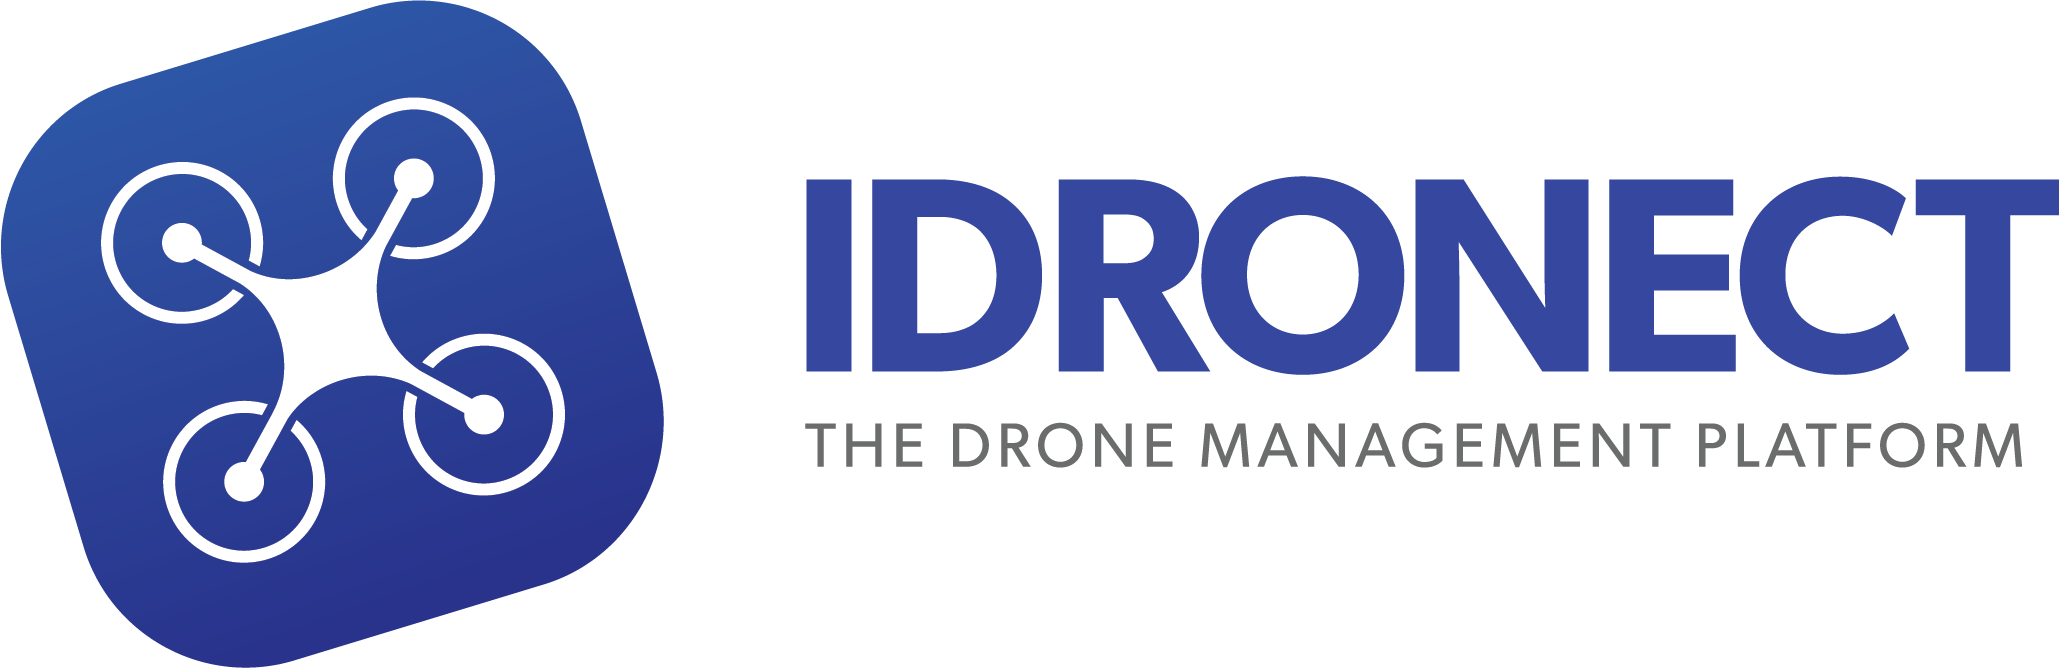 Blue Management Platform Logo - IDRONECT - The Drone Management Platform - Fly More